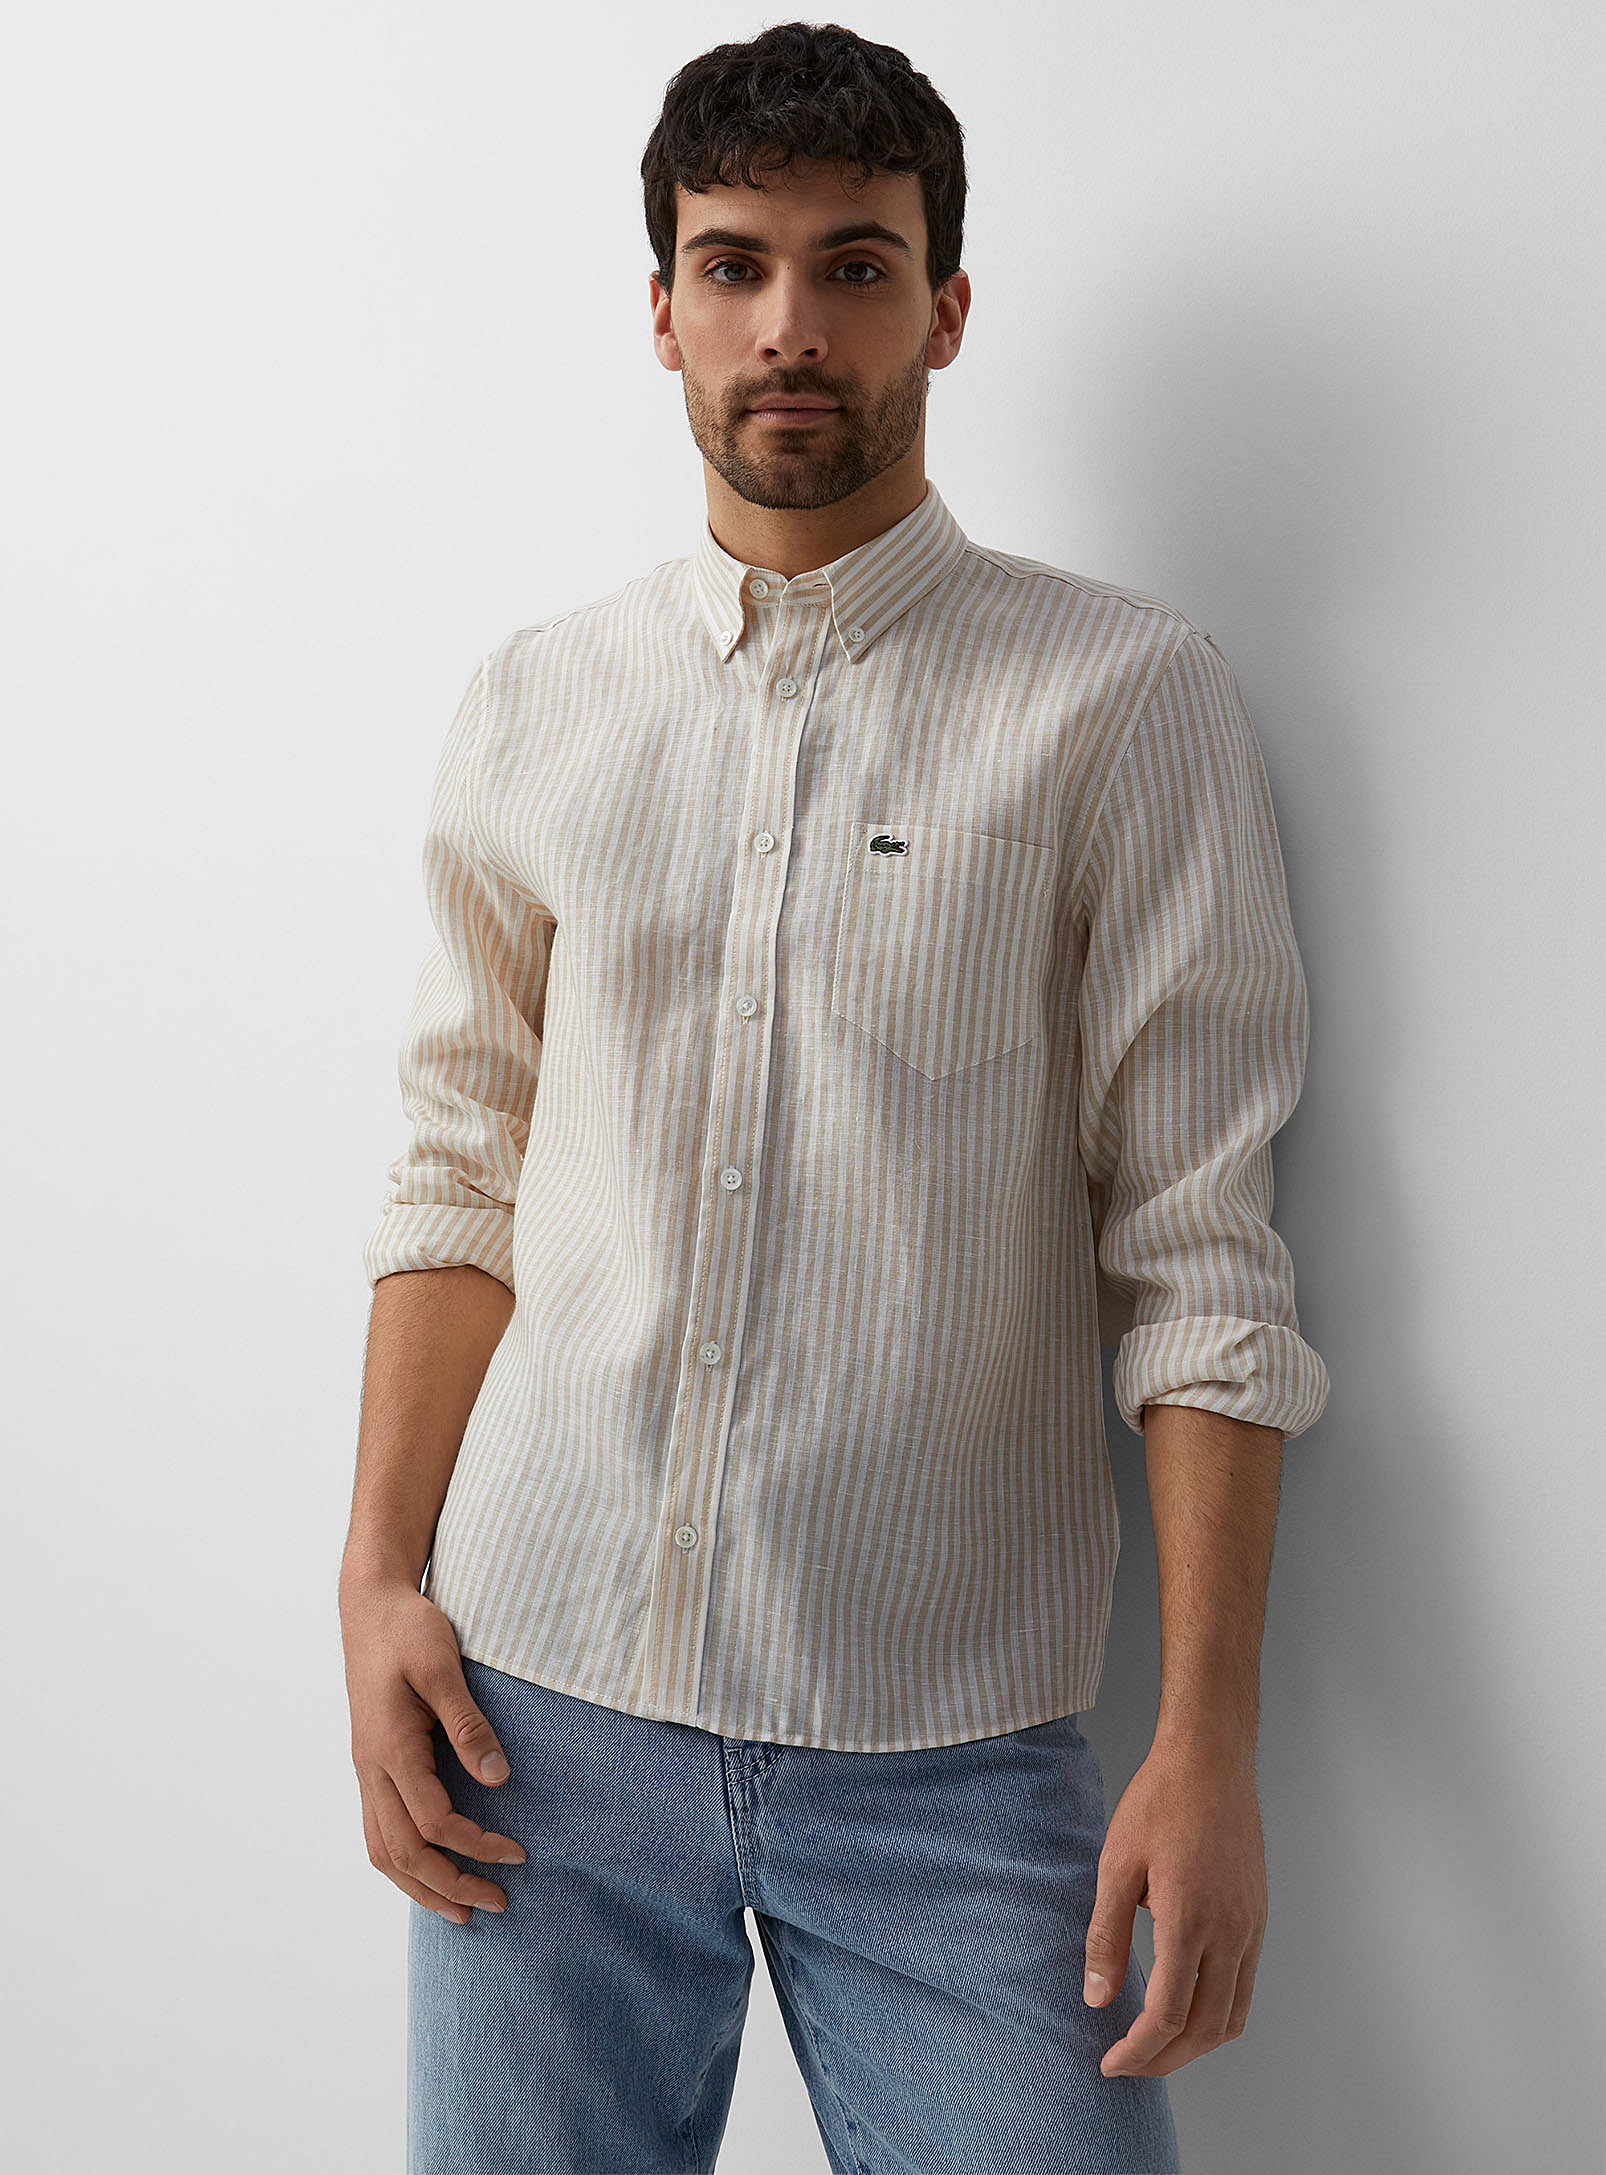 Lacoste - La chemise pur lin rayures verticales